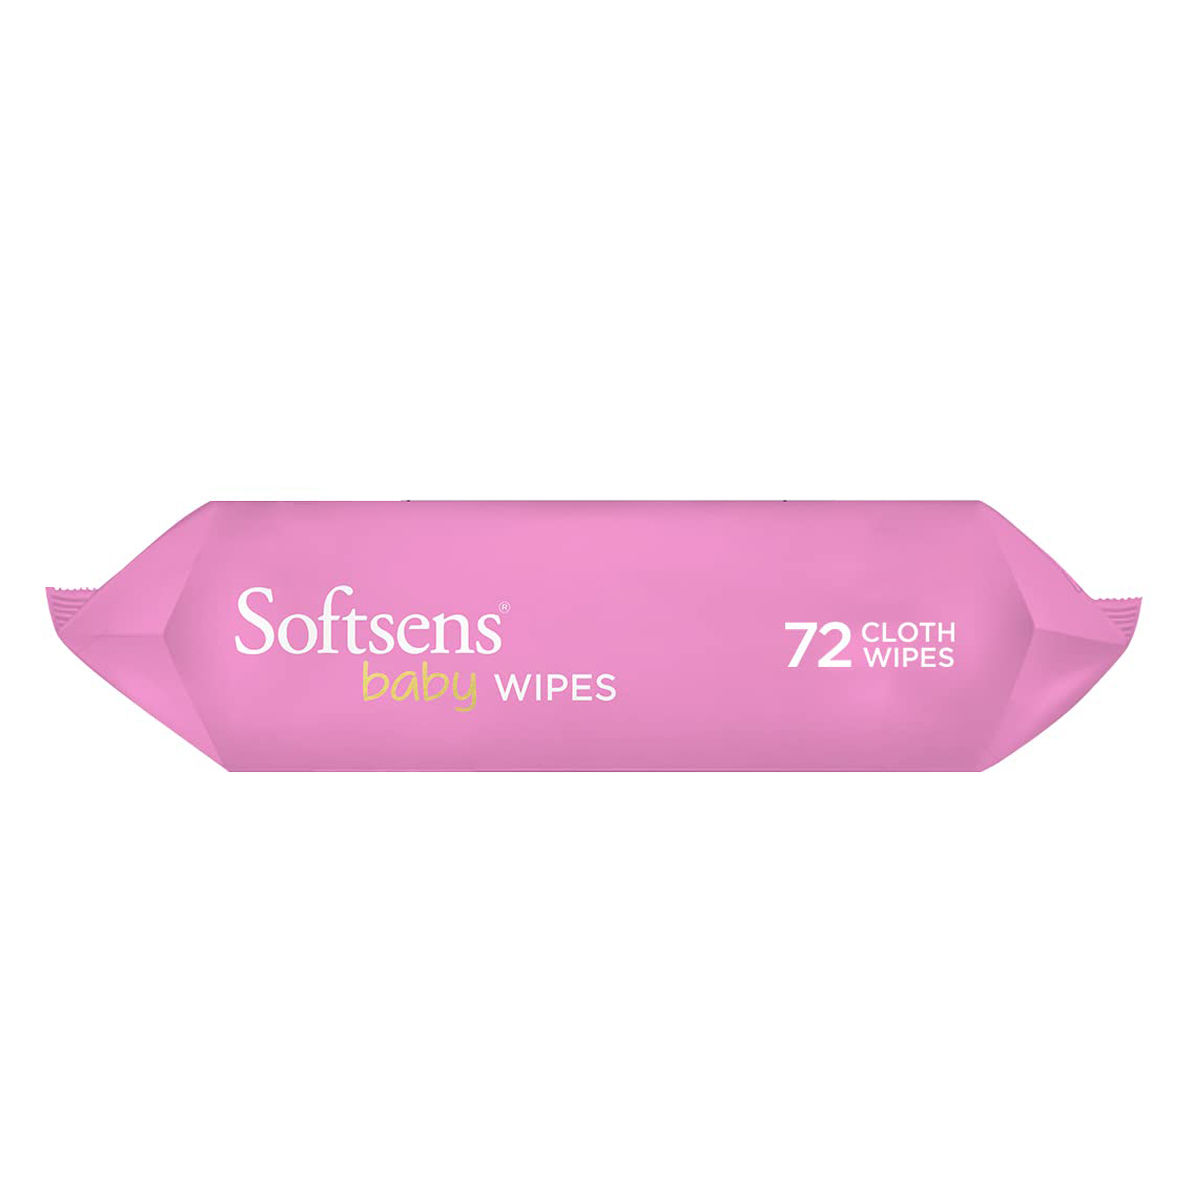 Softsens Aloevera & Vitamin E Baby WIpes, 72 Count, Pack of 1 